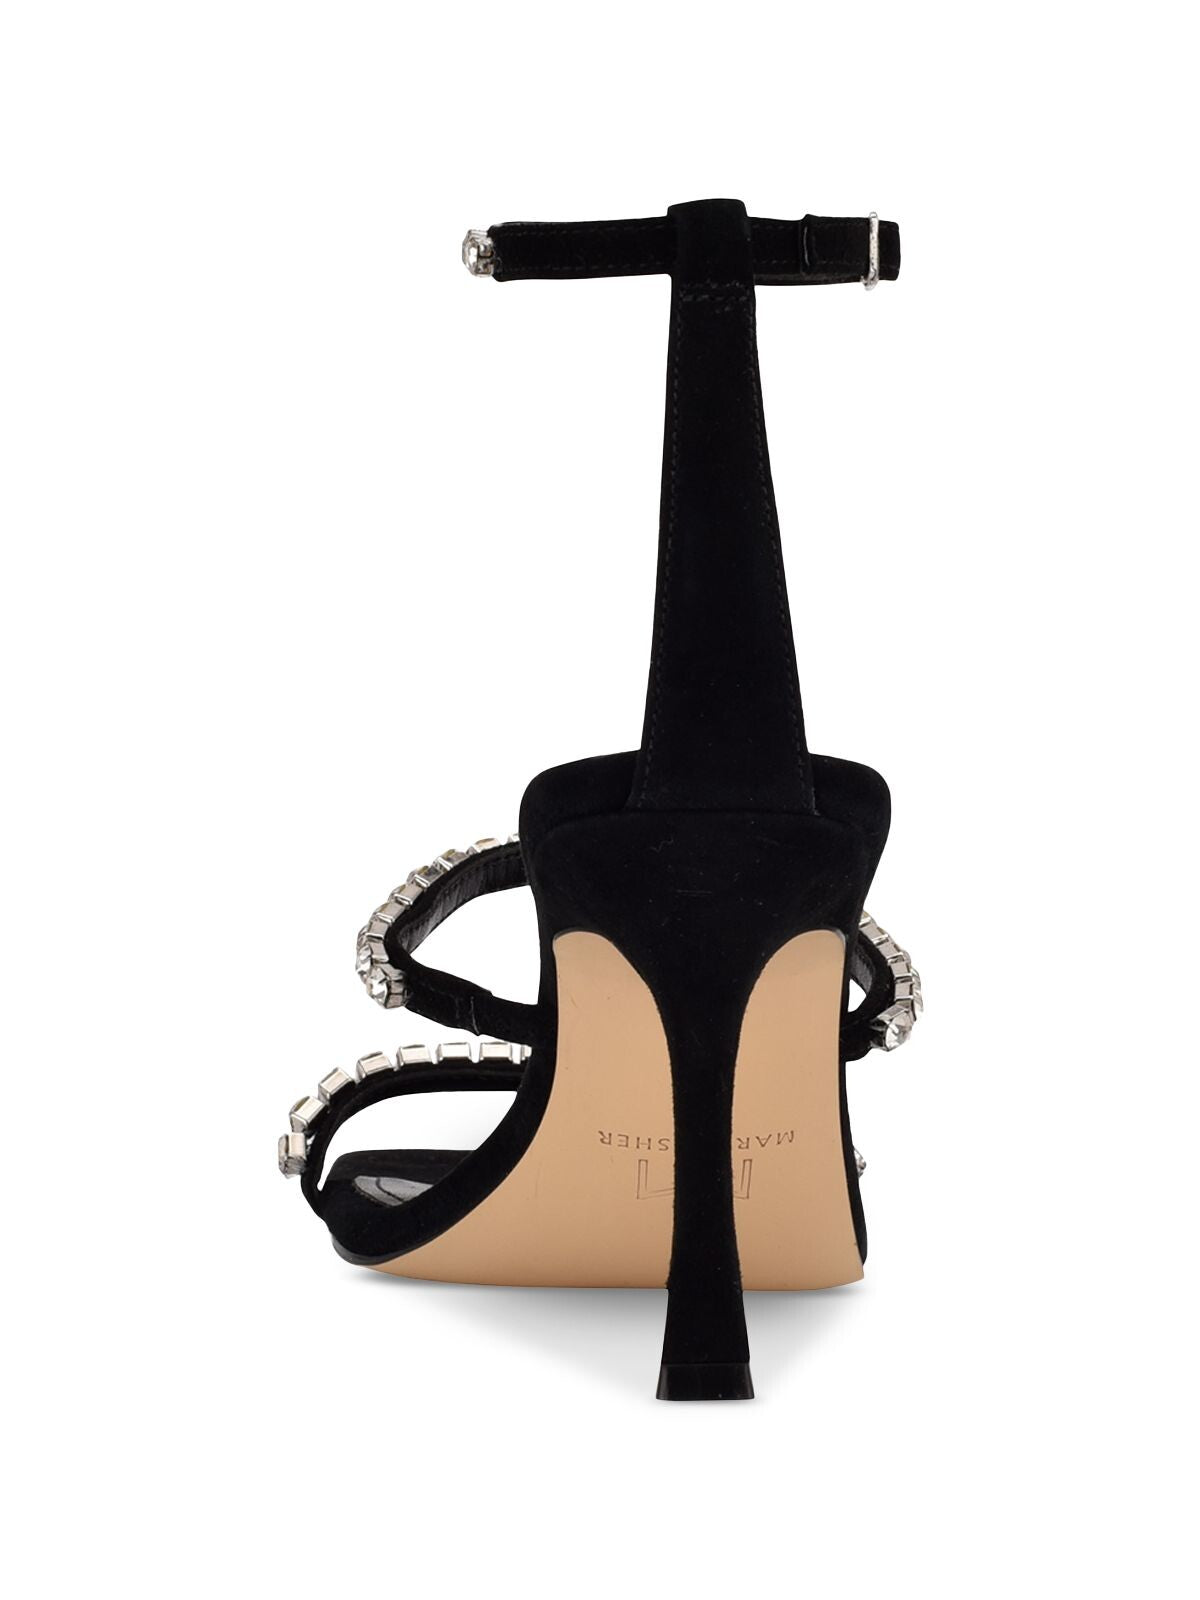 MARC FISHER LTD Womens Black Ankle Strap Embellished Dezzi Square Toe Stiletto Buckle Leather Dress Heeled Sandal 6 M